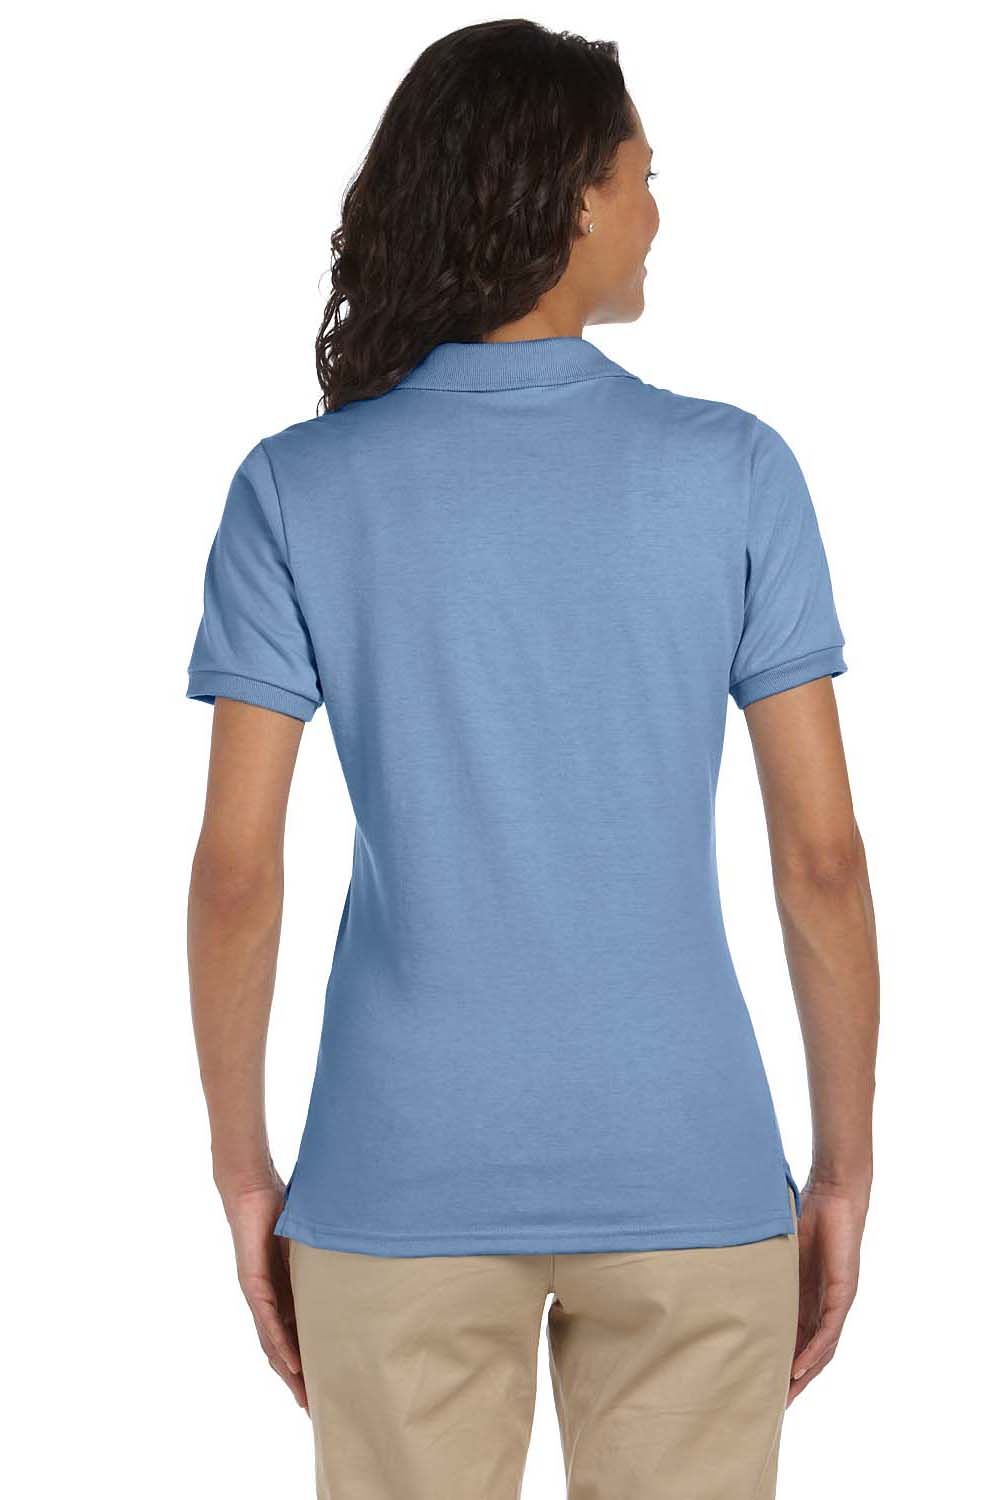 Jerzees 437W Womens SpotShield Stain Resistant Short Sleeve Polo Shirt Light Blue Back